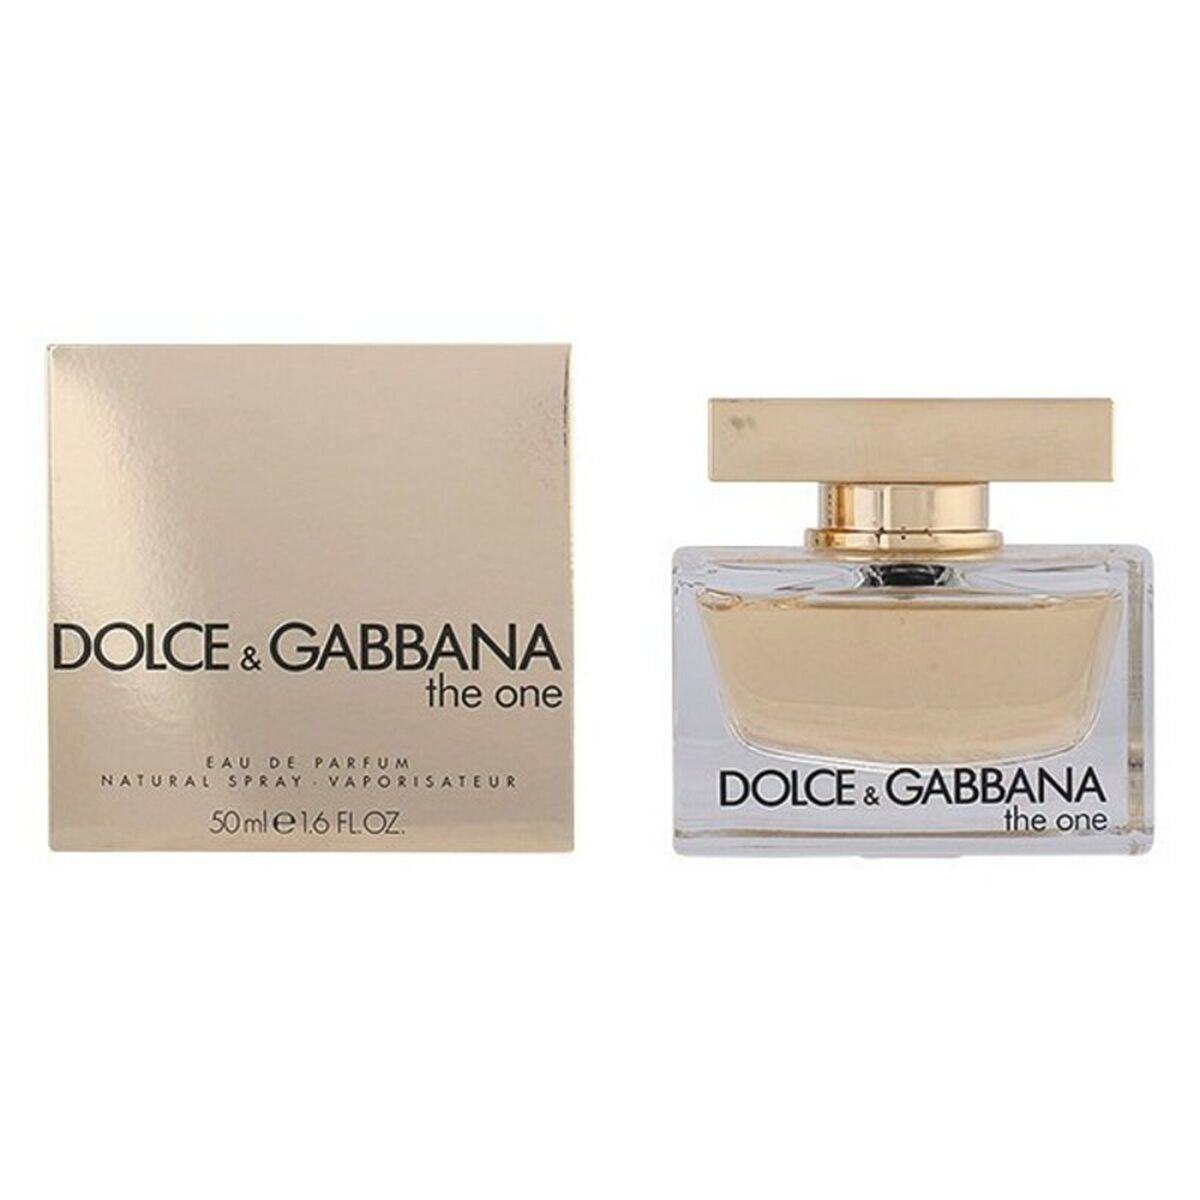 Kaufe The One Dolce & Gabbana EDP - Damen bei AWK Flagship um € 69.00